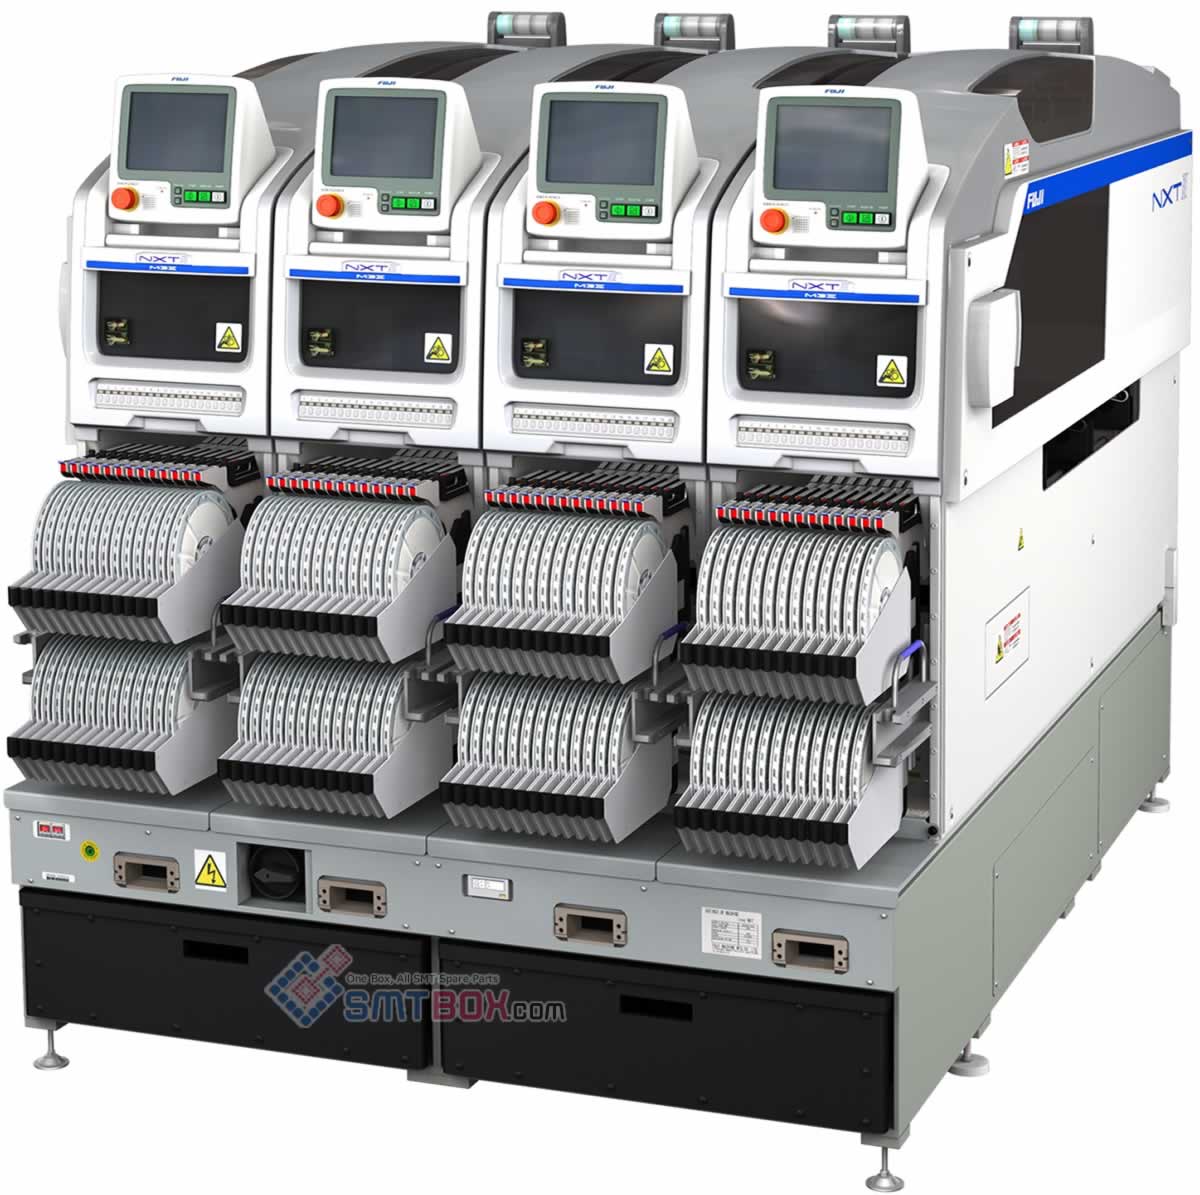 FUJI NXTIII SMT Placing Machine